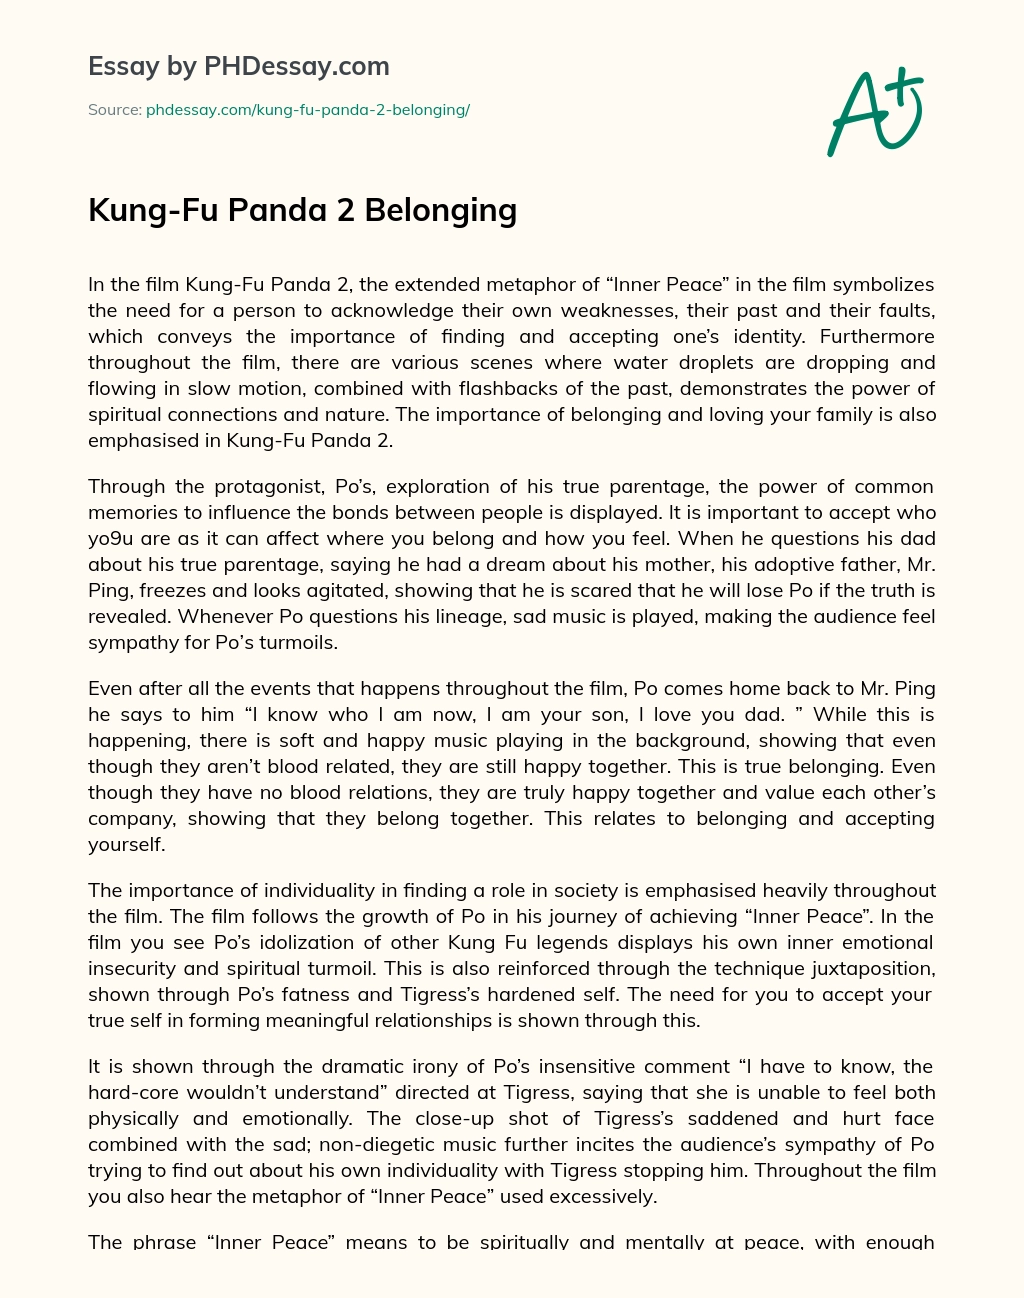 Kung-Fu Panda 2 Belonging essay